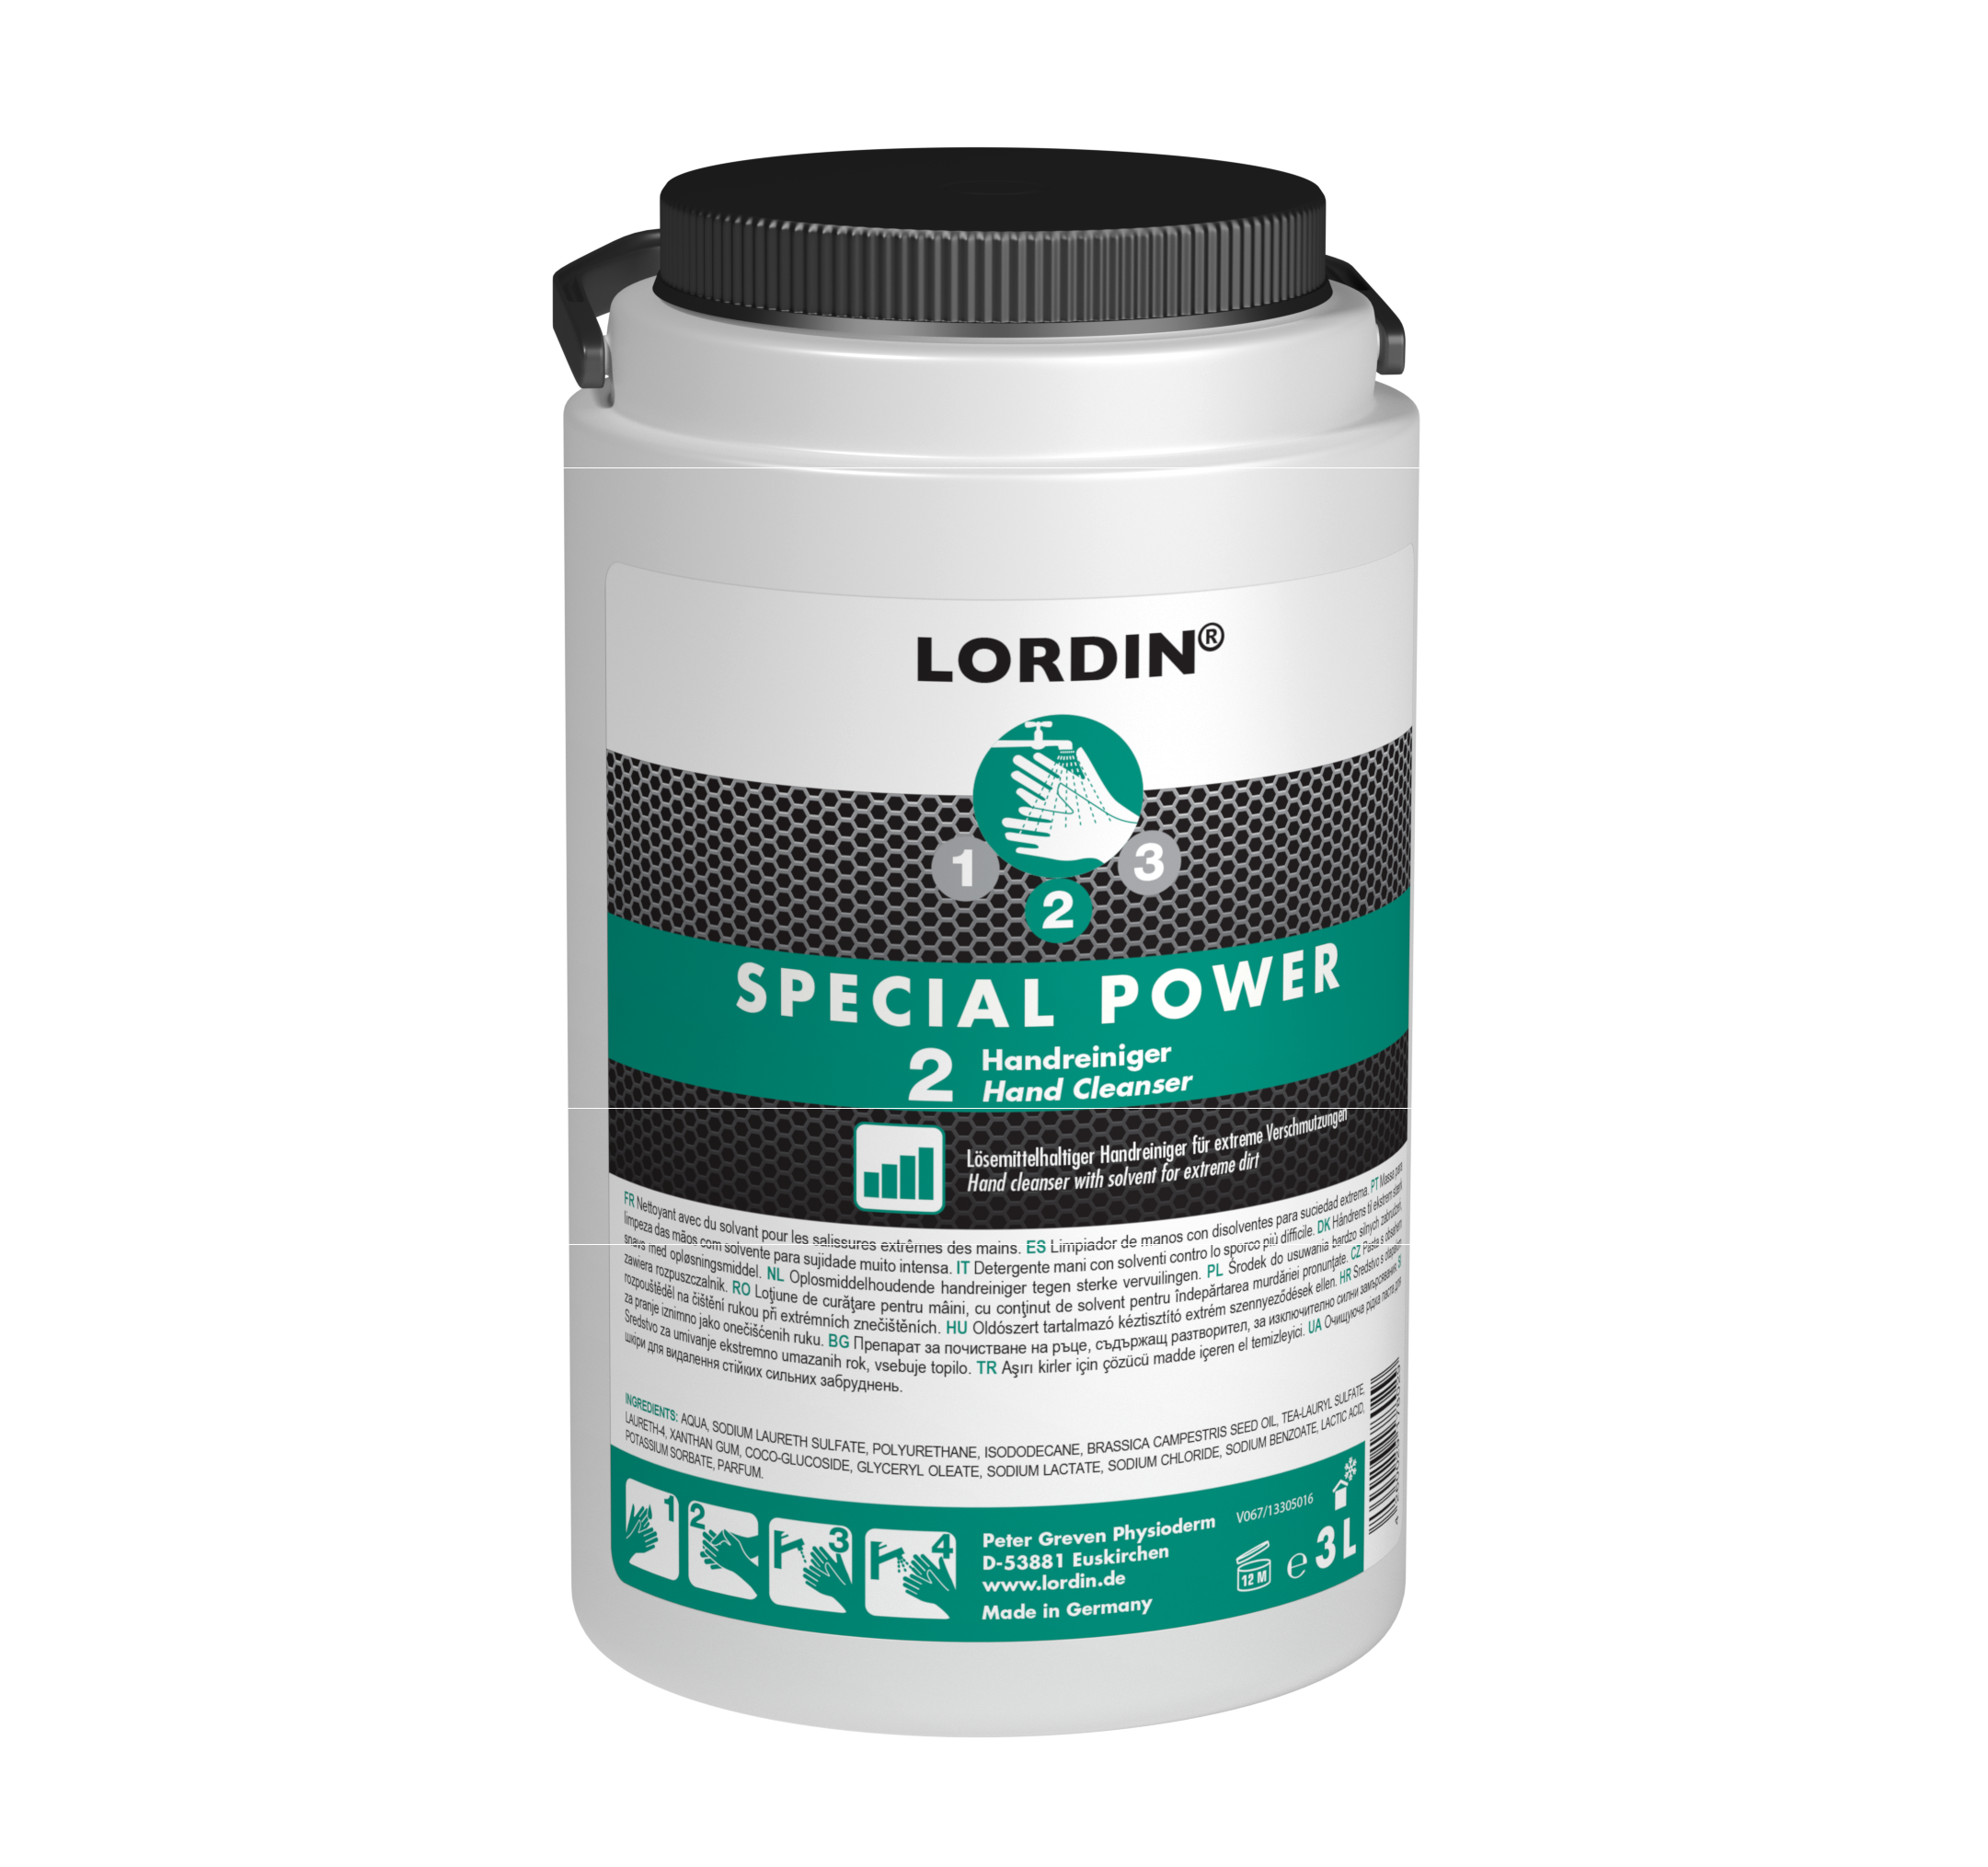 LORDIN SPECIAL POWER HANDREINIGER 3L - PGP